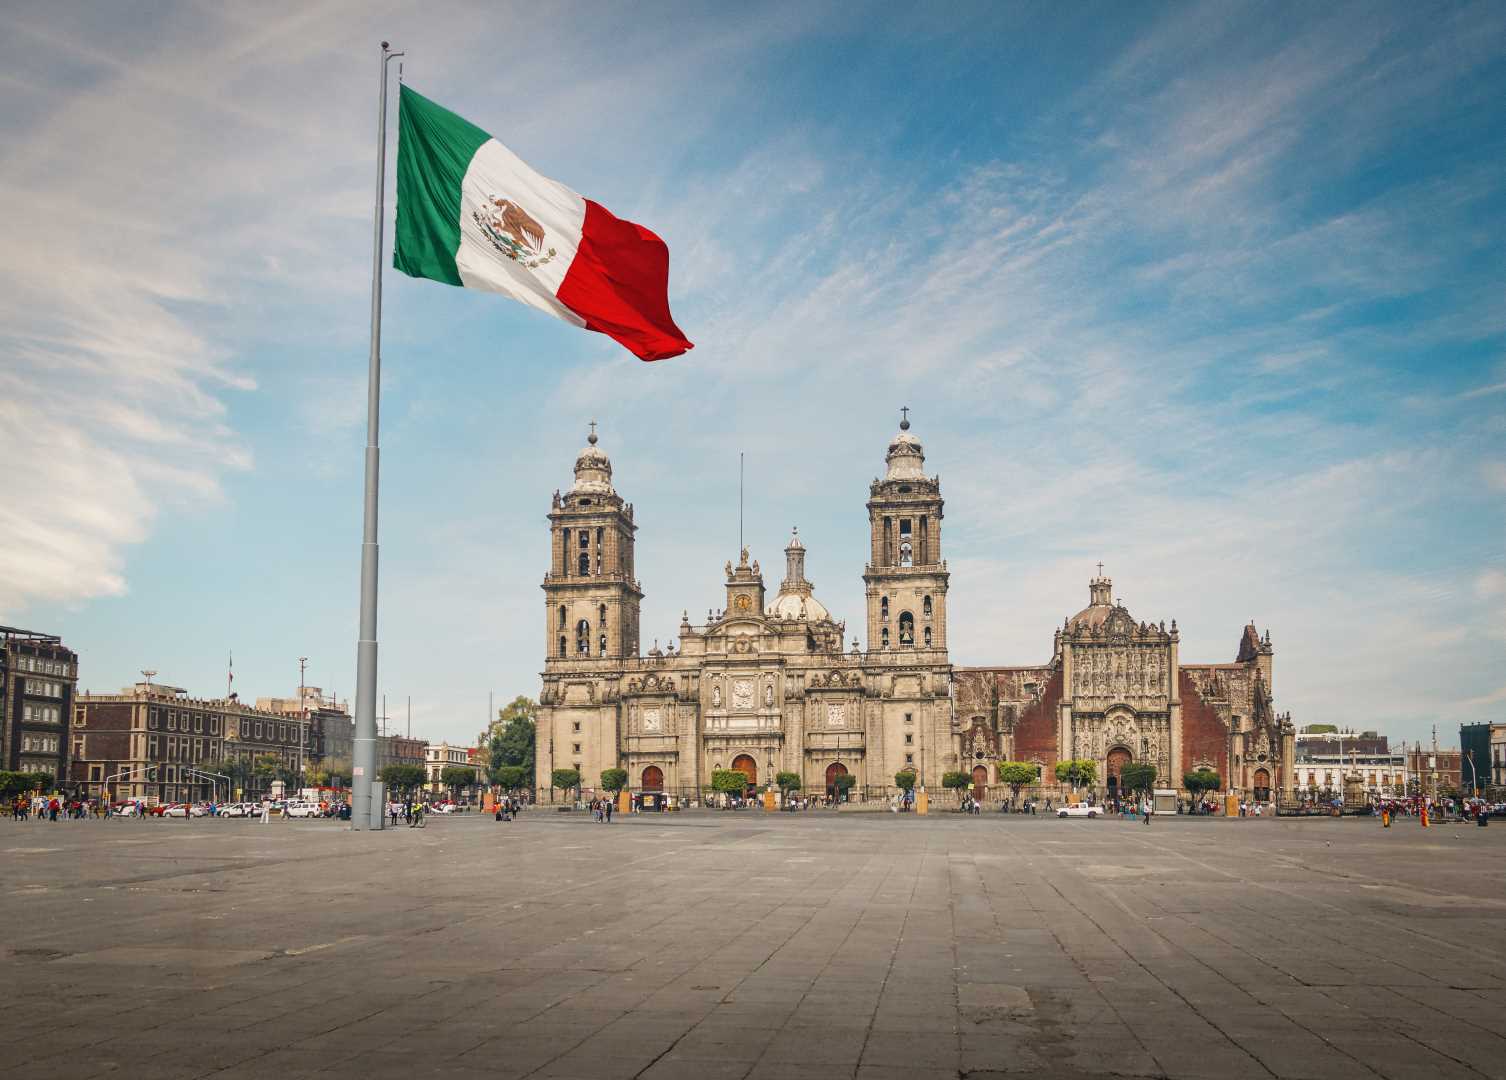 Zocalo Square and Mexico City Cathedral – Mexico City, Mexico